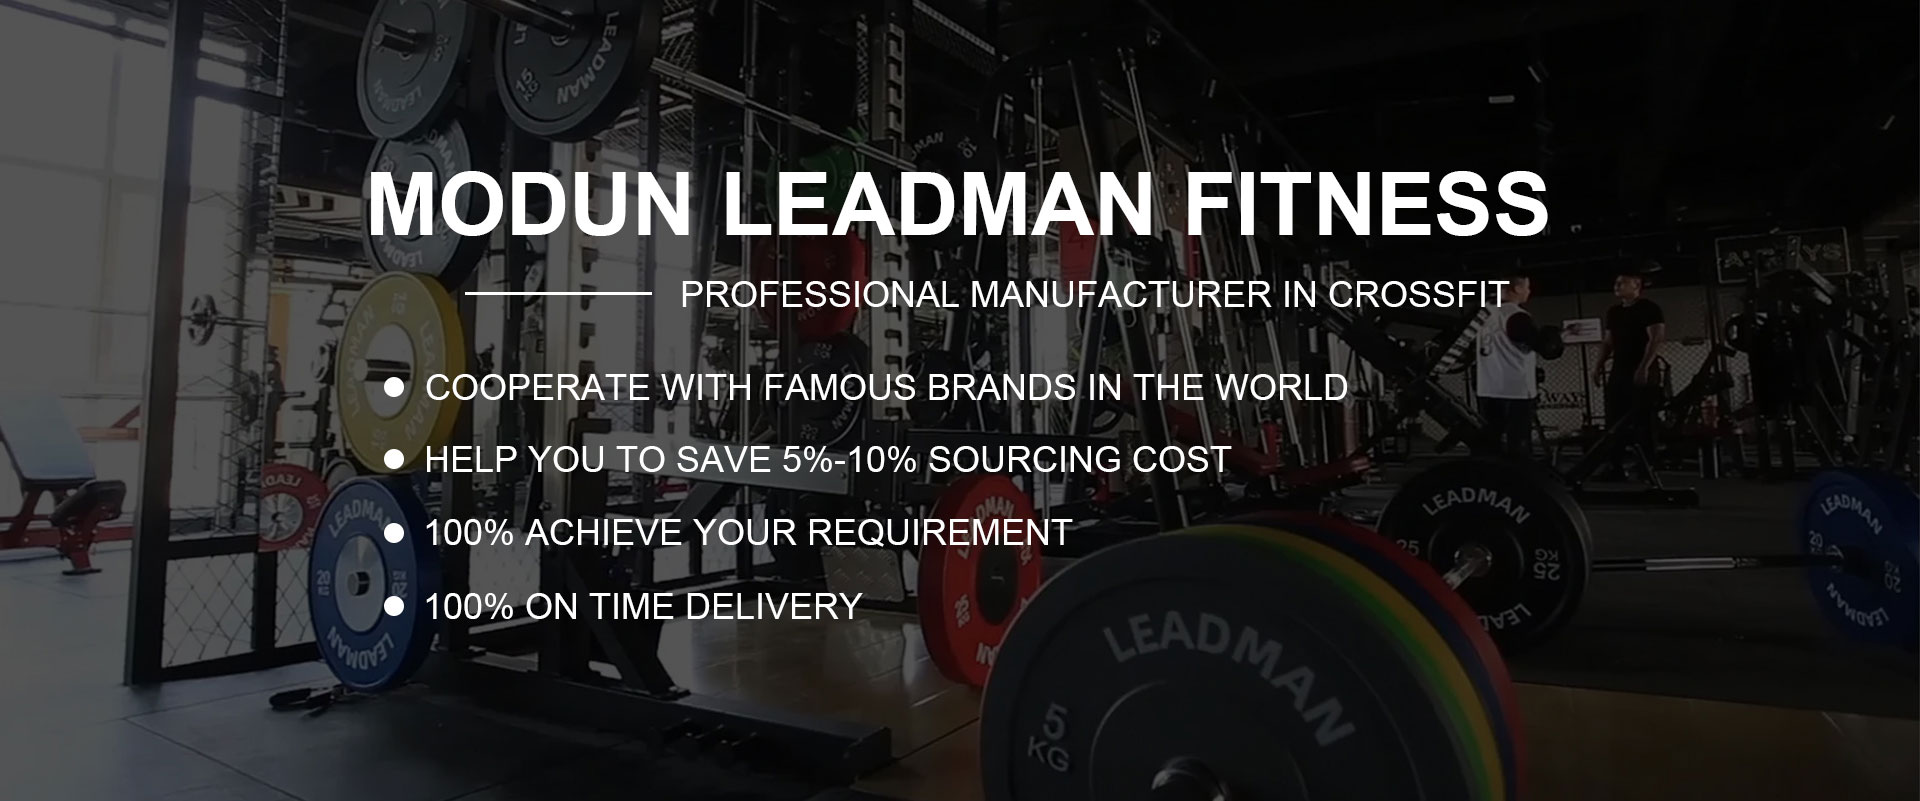 Gym Equipment Distributors|Modun Leadman Fitness